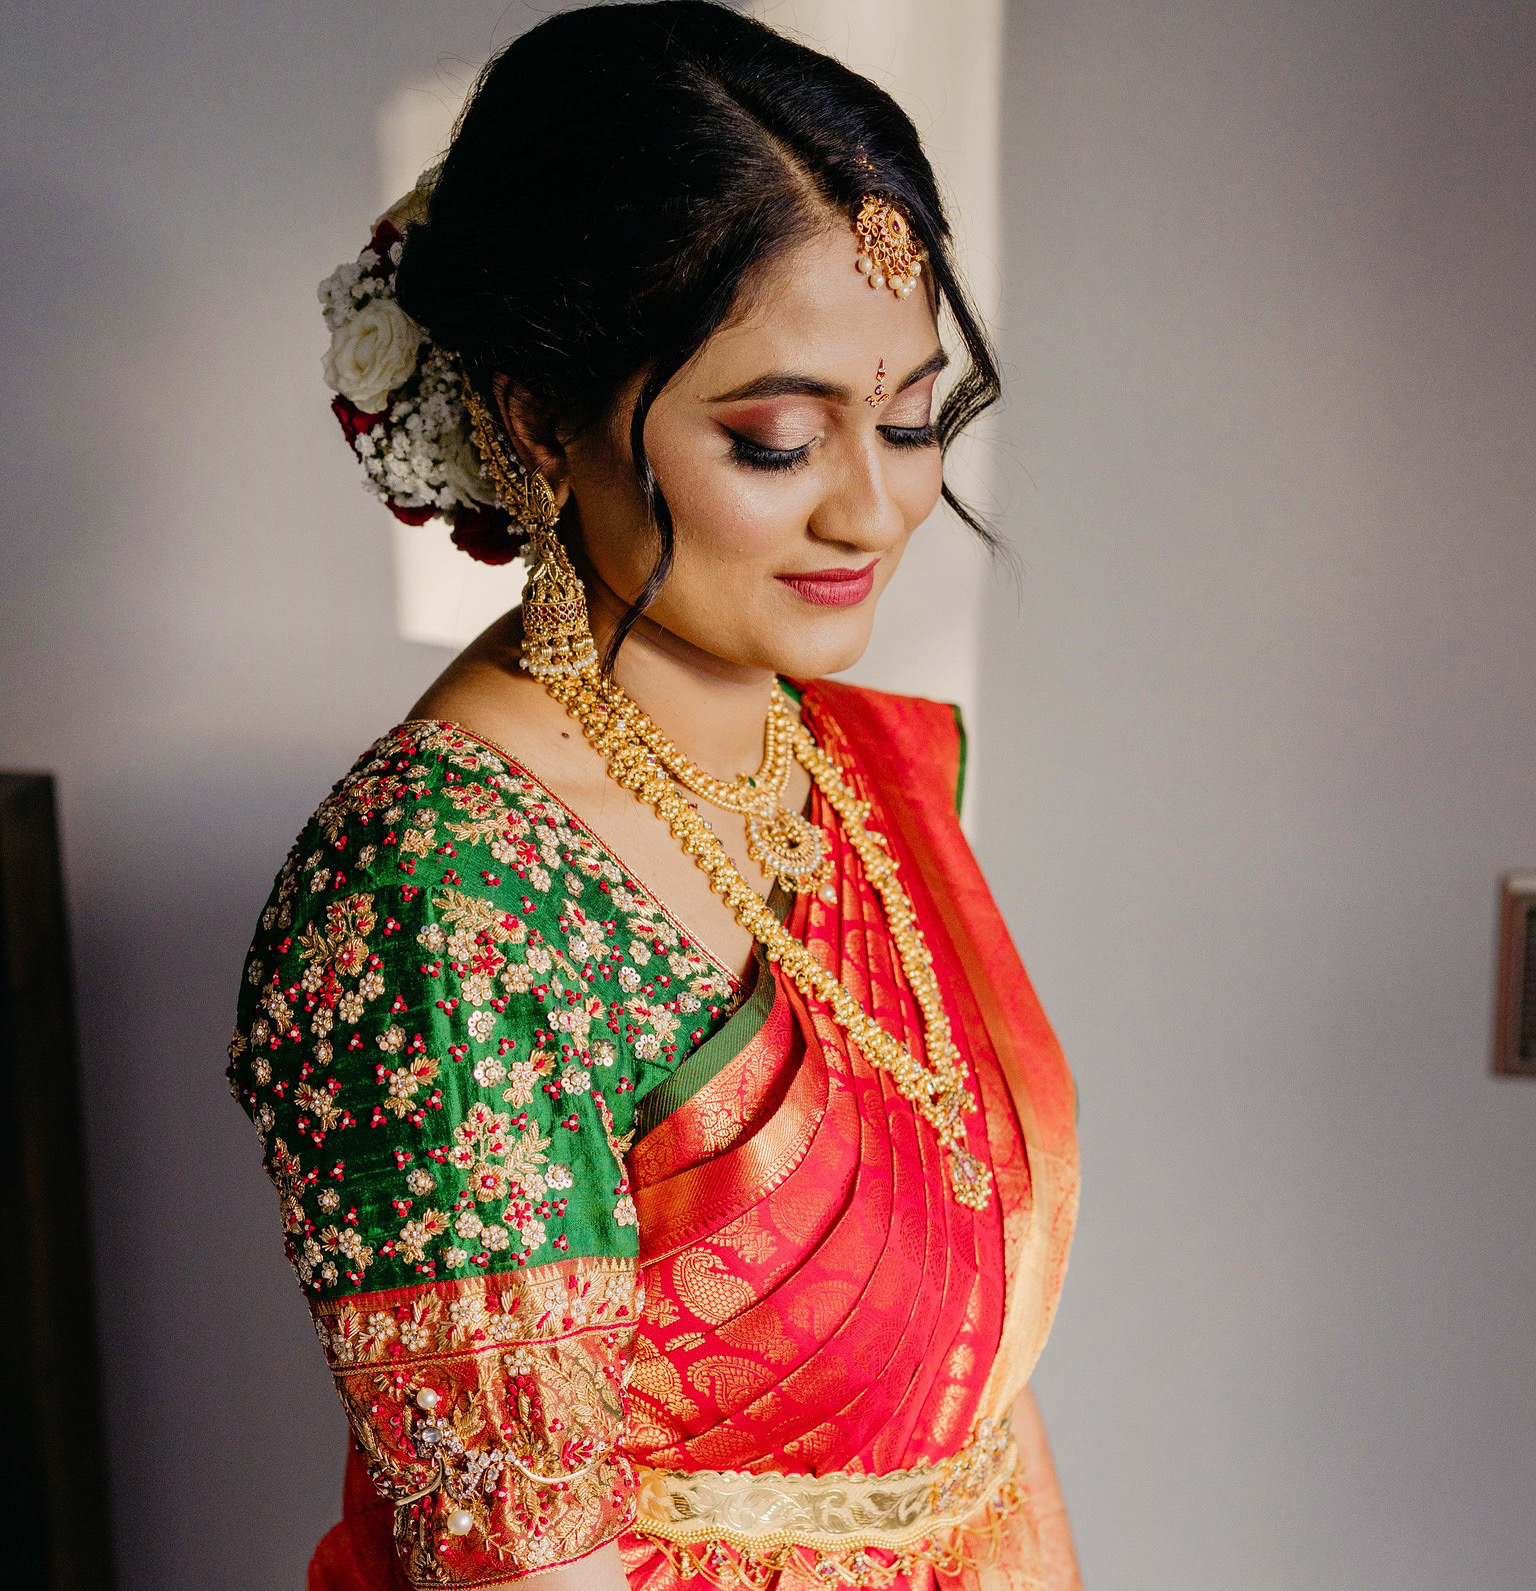 Indian Bridal Hair And Makeup Sydney - Heera Hair And Makeup